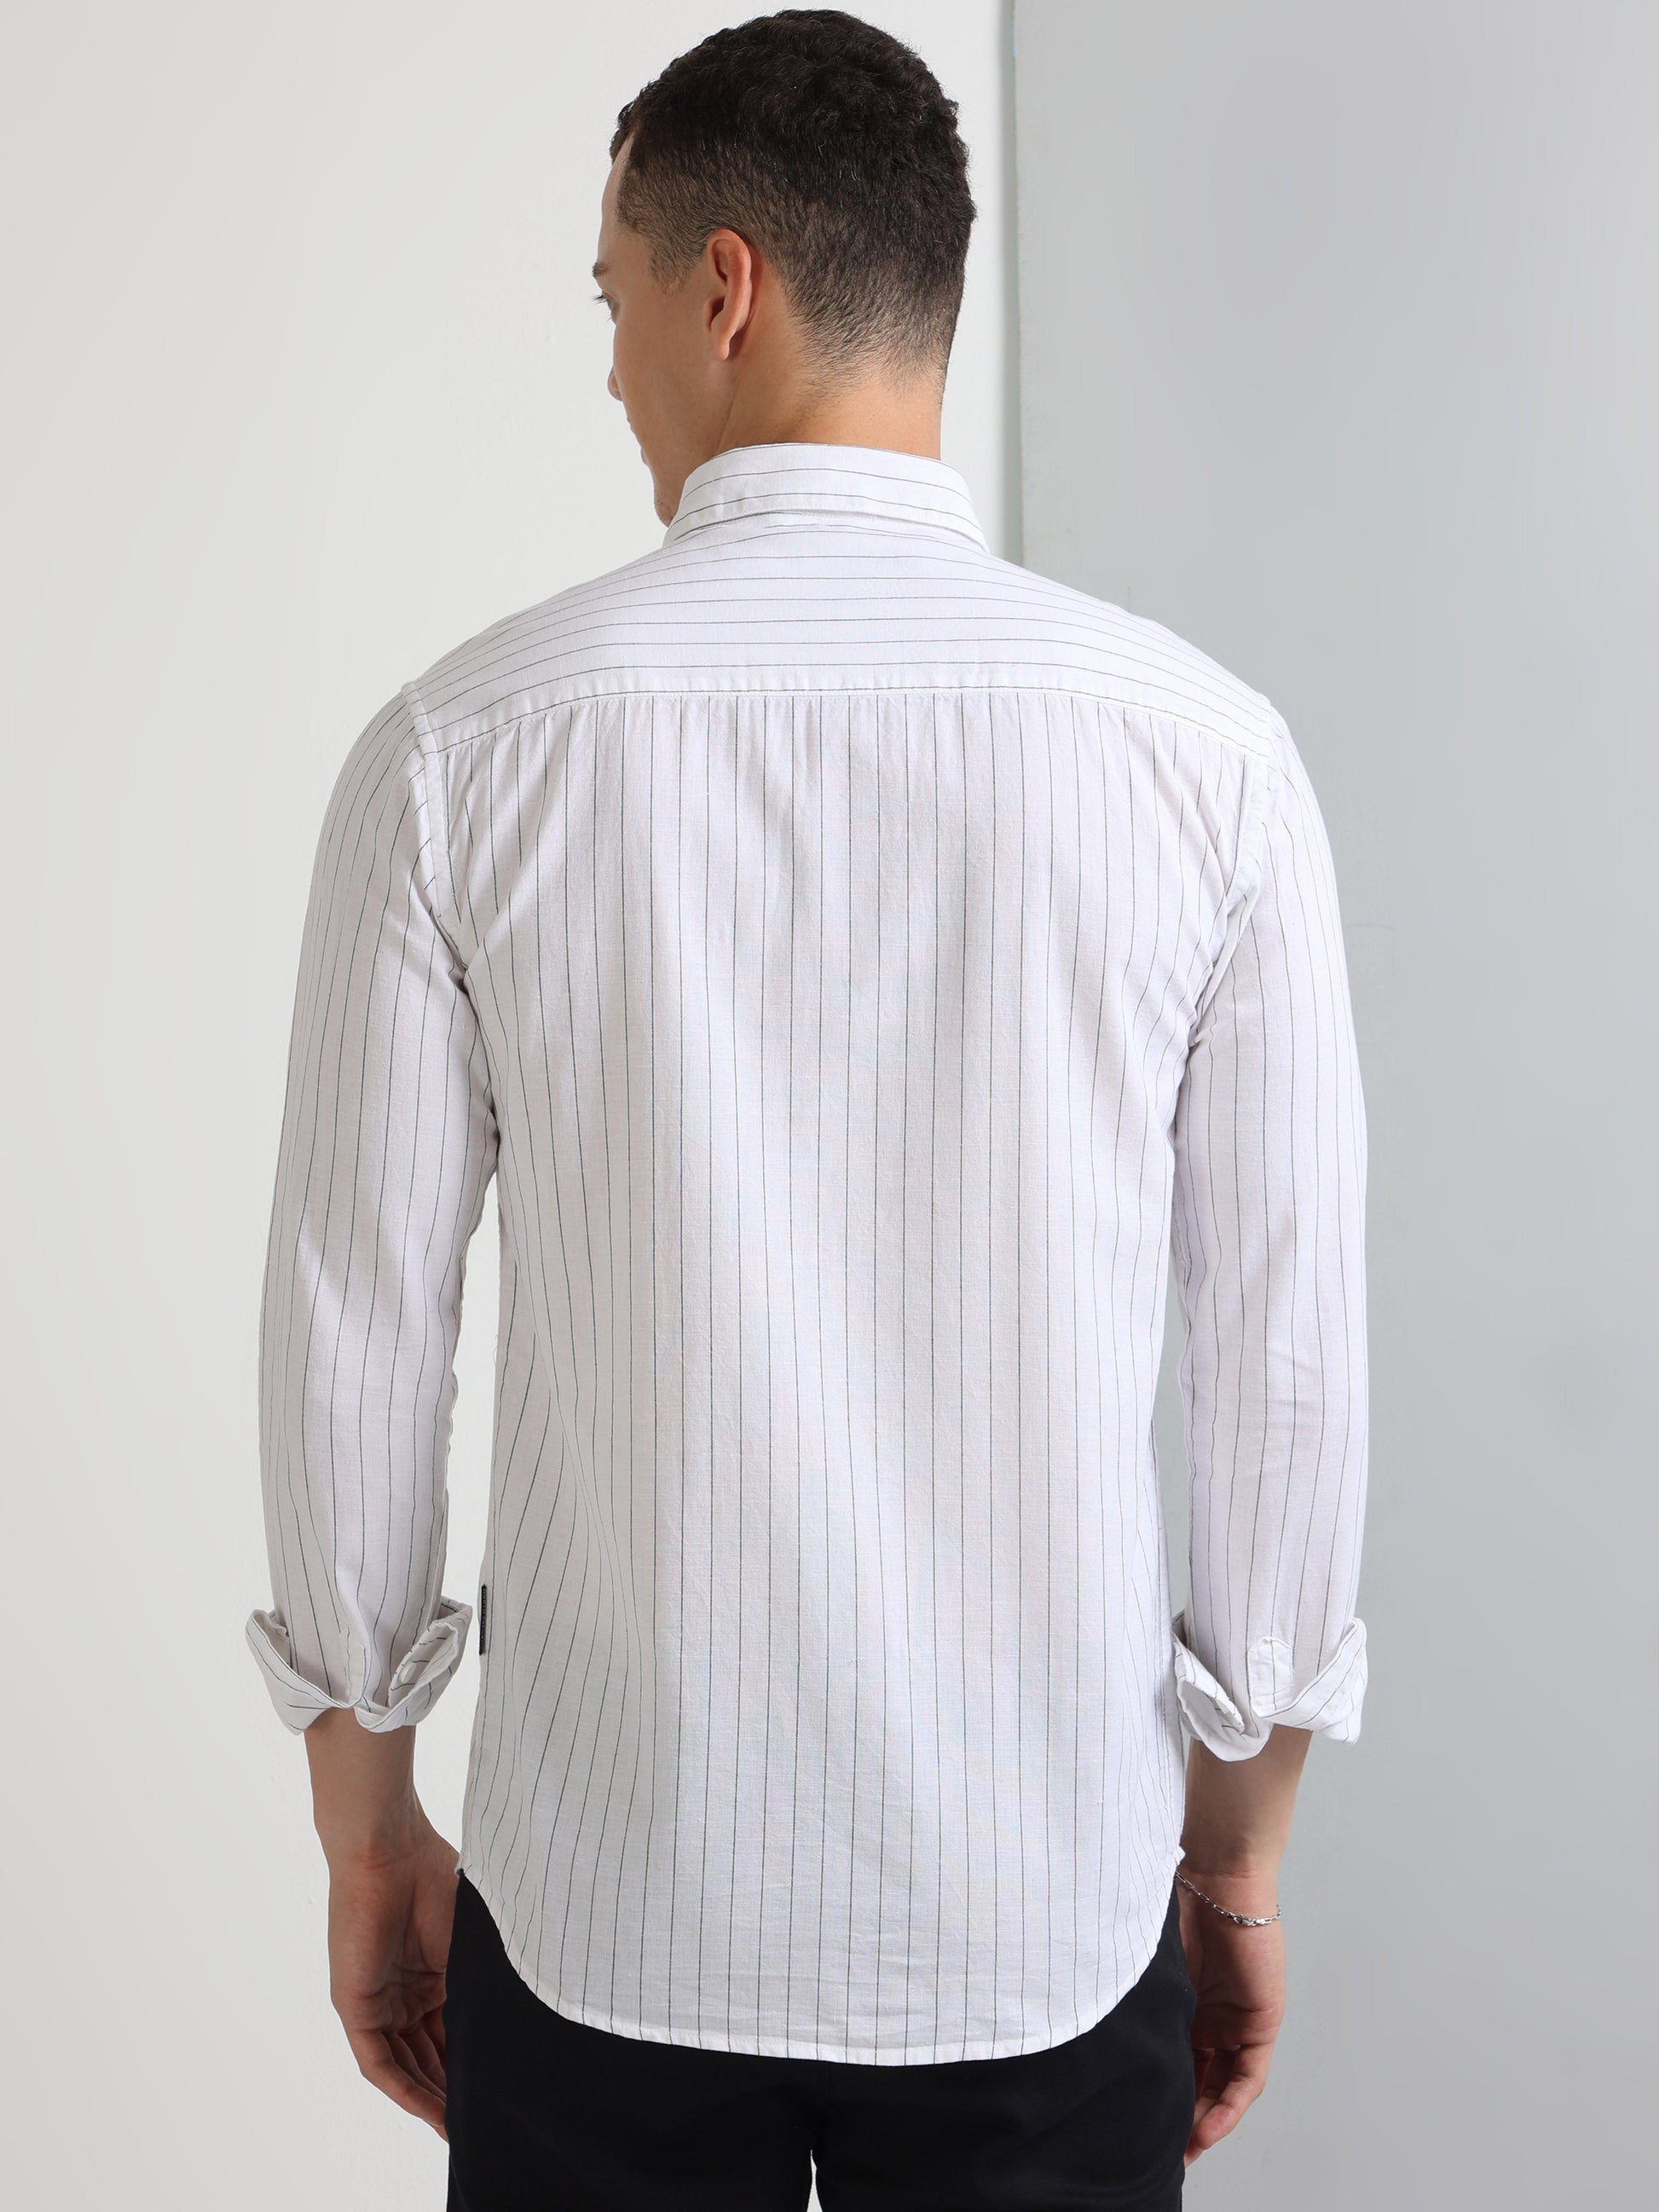 Buy Pin Stripe Zipper  Pocket Stylish Shirt Online.